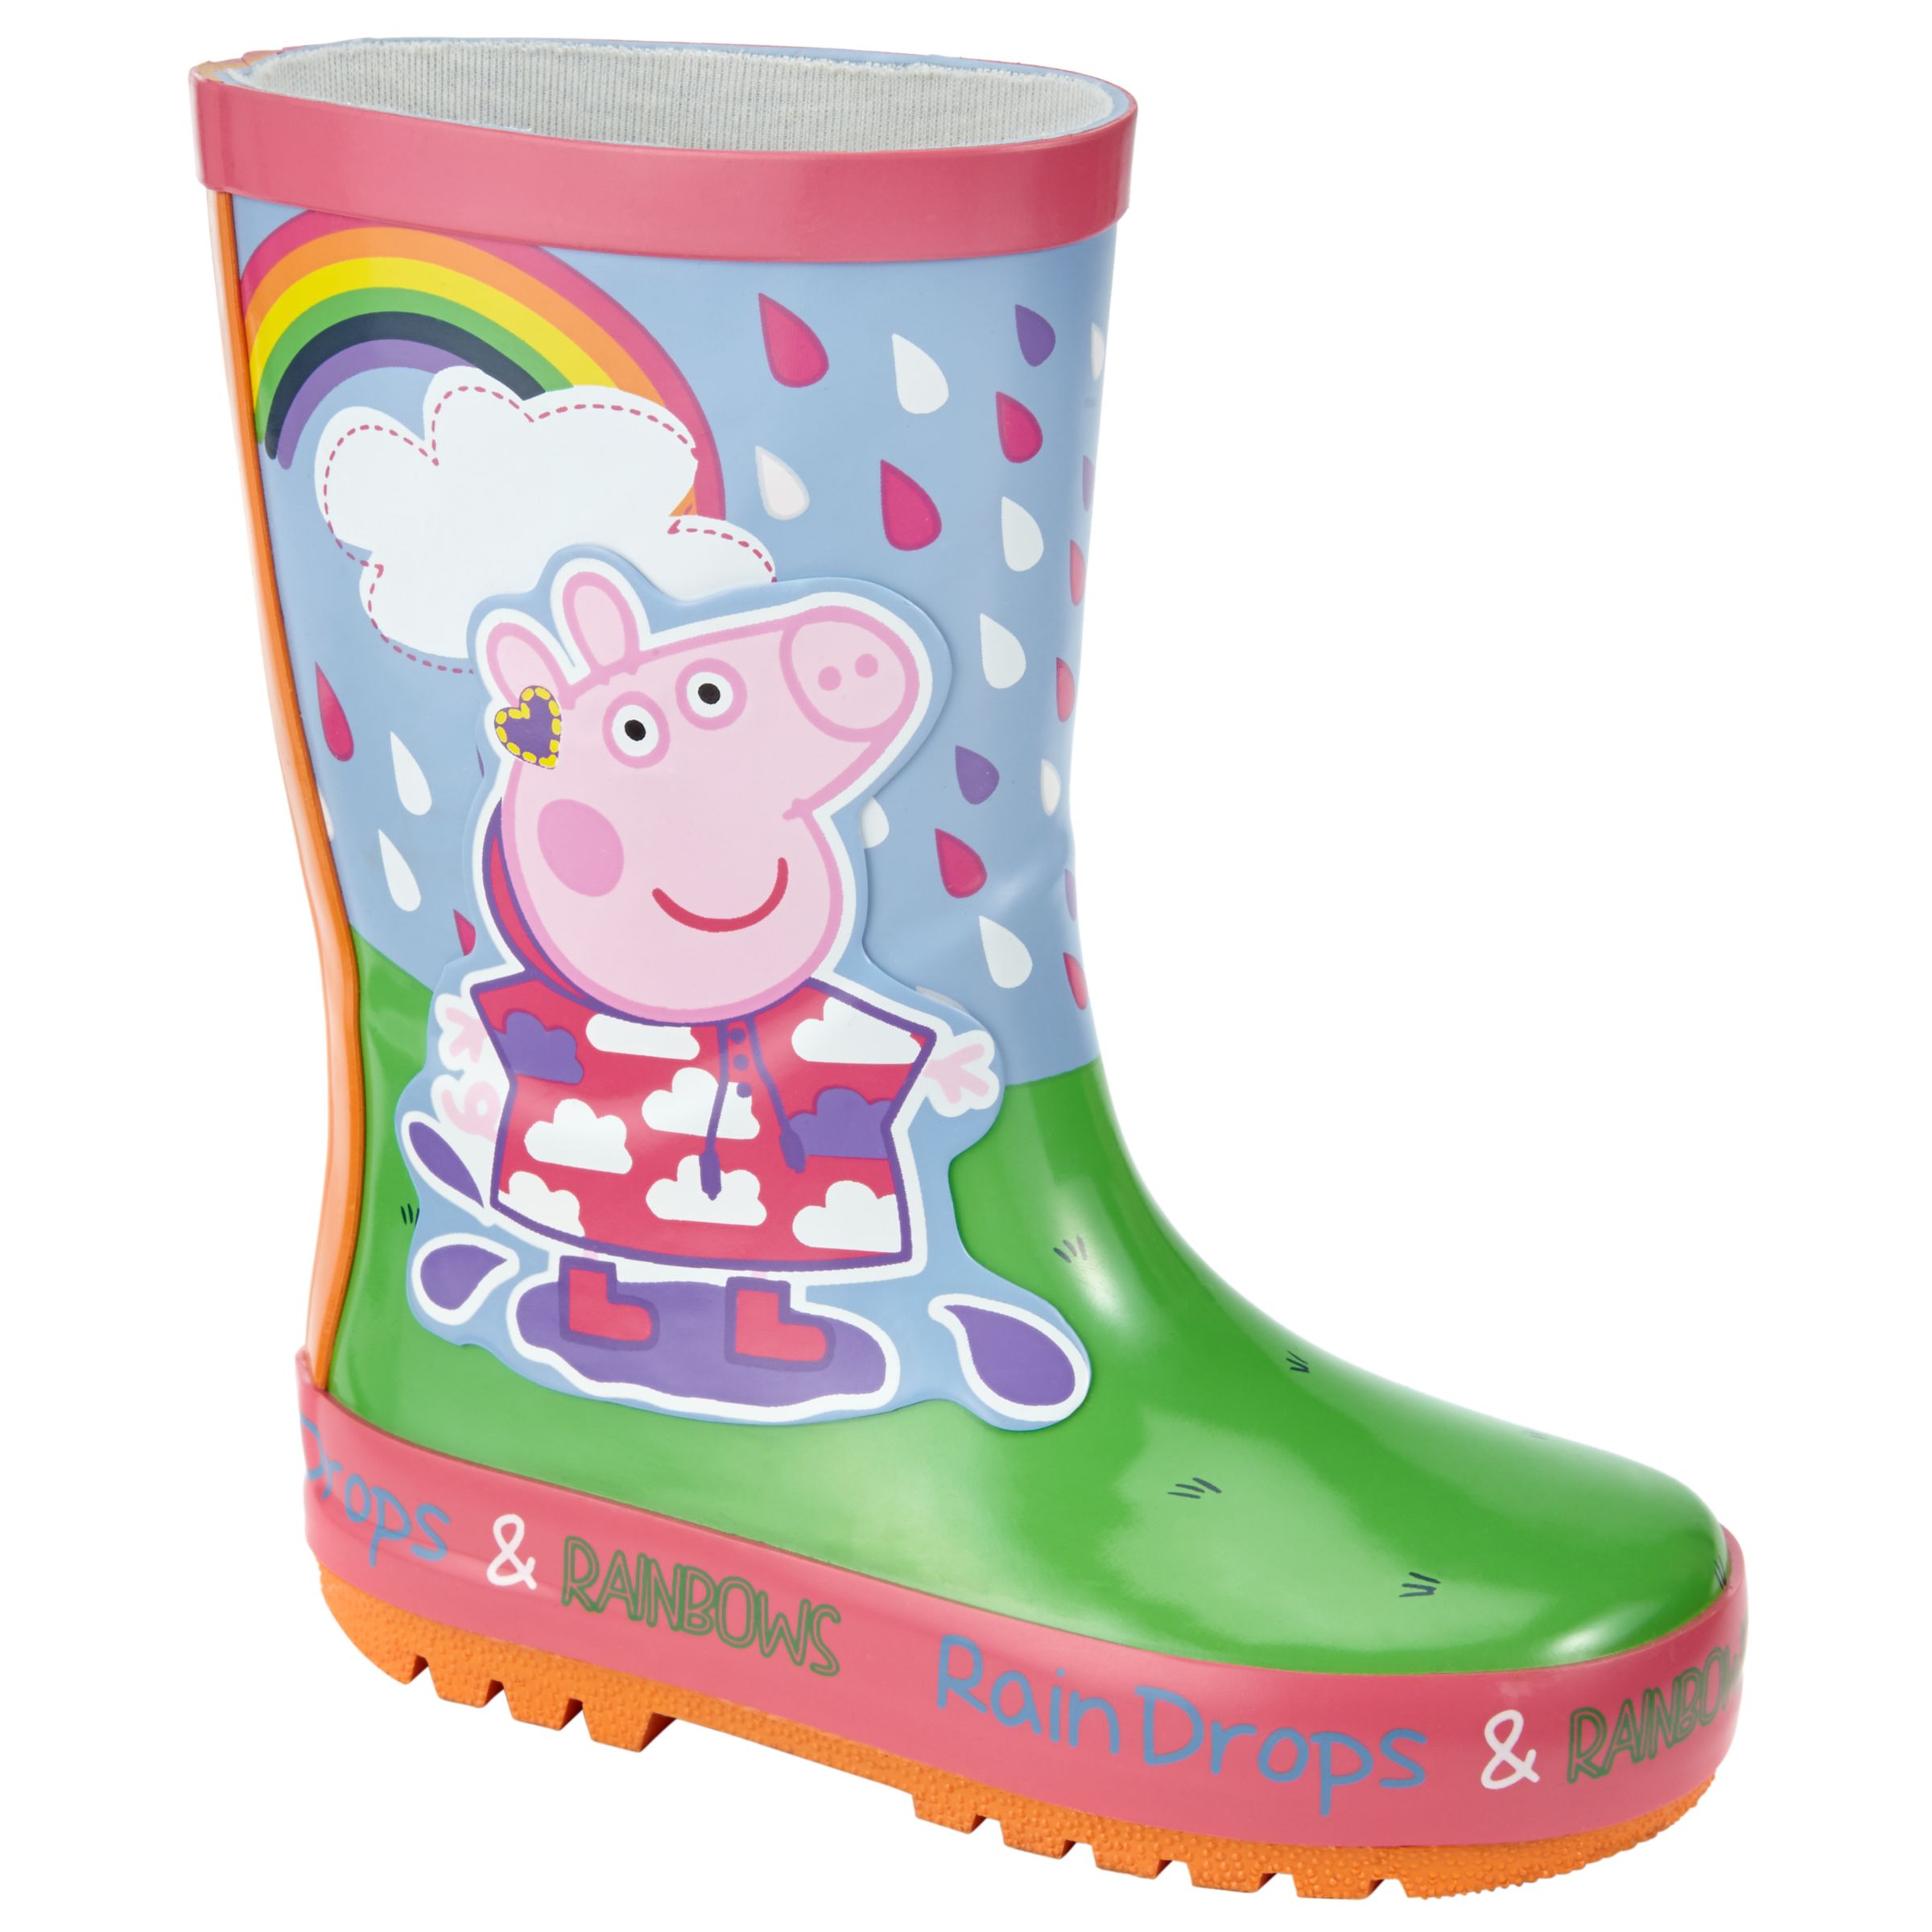 Peppa Pig Children's Rainbow Wellington Boots, Pink/Multi, 6 Jnr